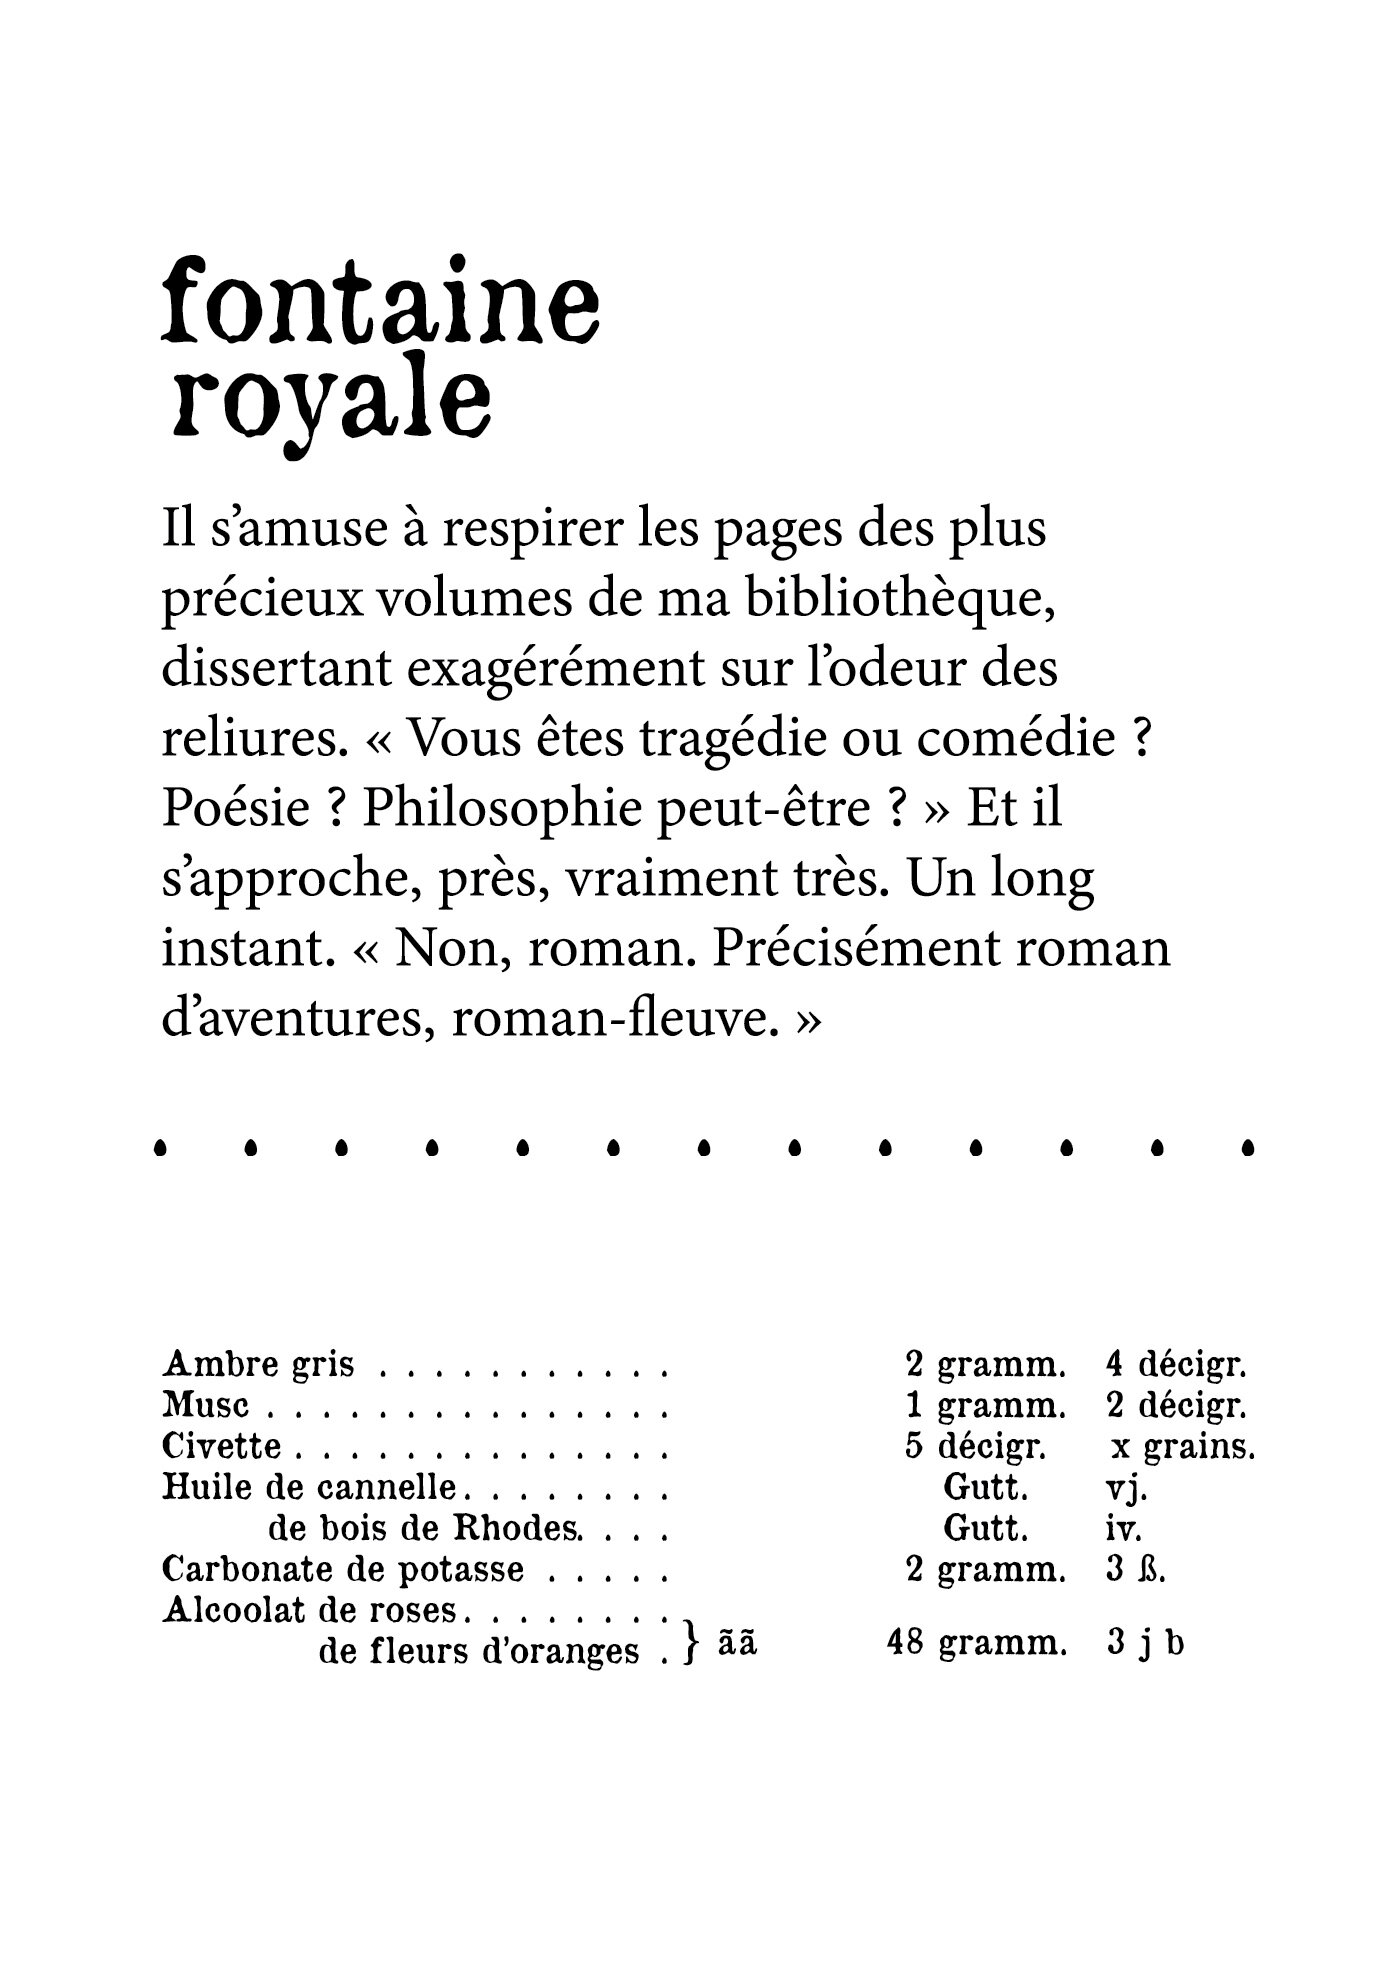 fontaine royale+recipe+FR.jpg